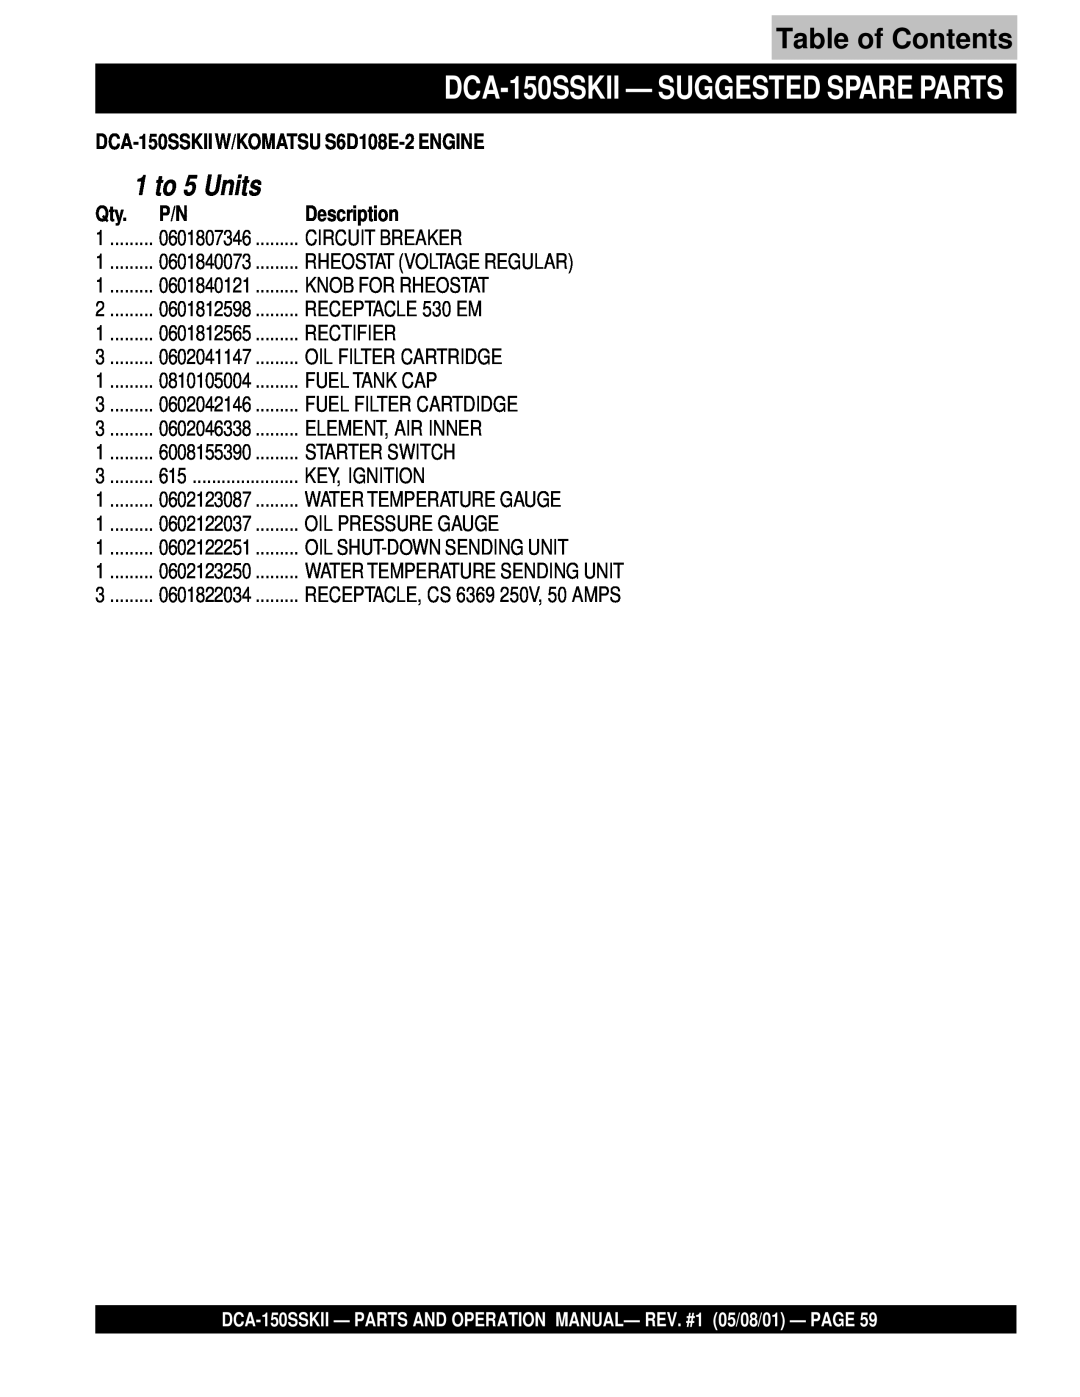 Multiquip DCA-150SSKII - SUGGESTED SPARE PARTS, DCA-150SSKII W/KOMATSU S6D108E-2 ENGINE, Description, Table of Contents 